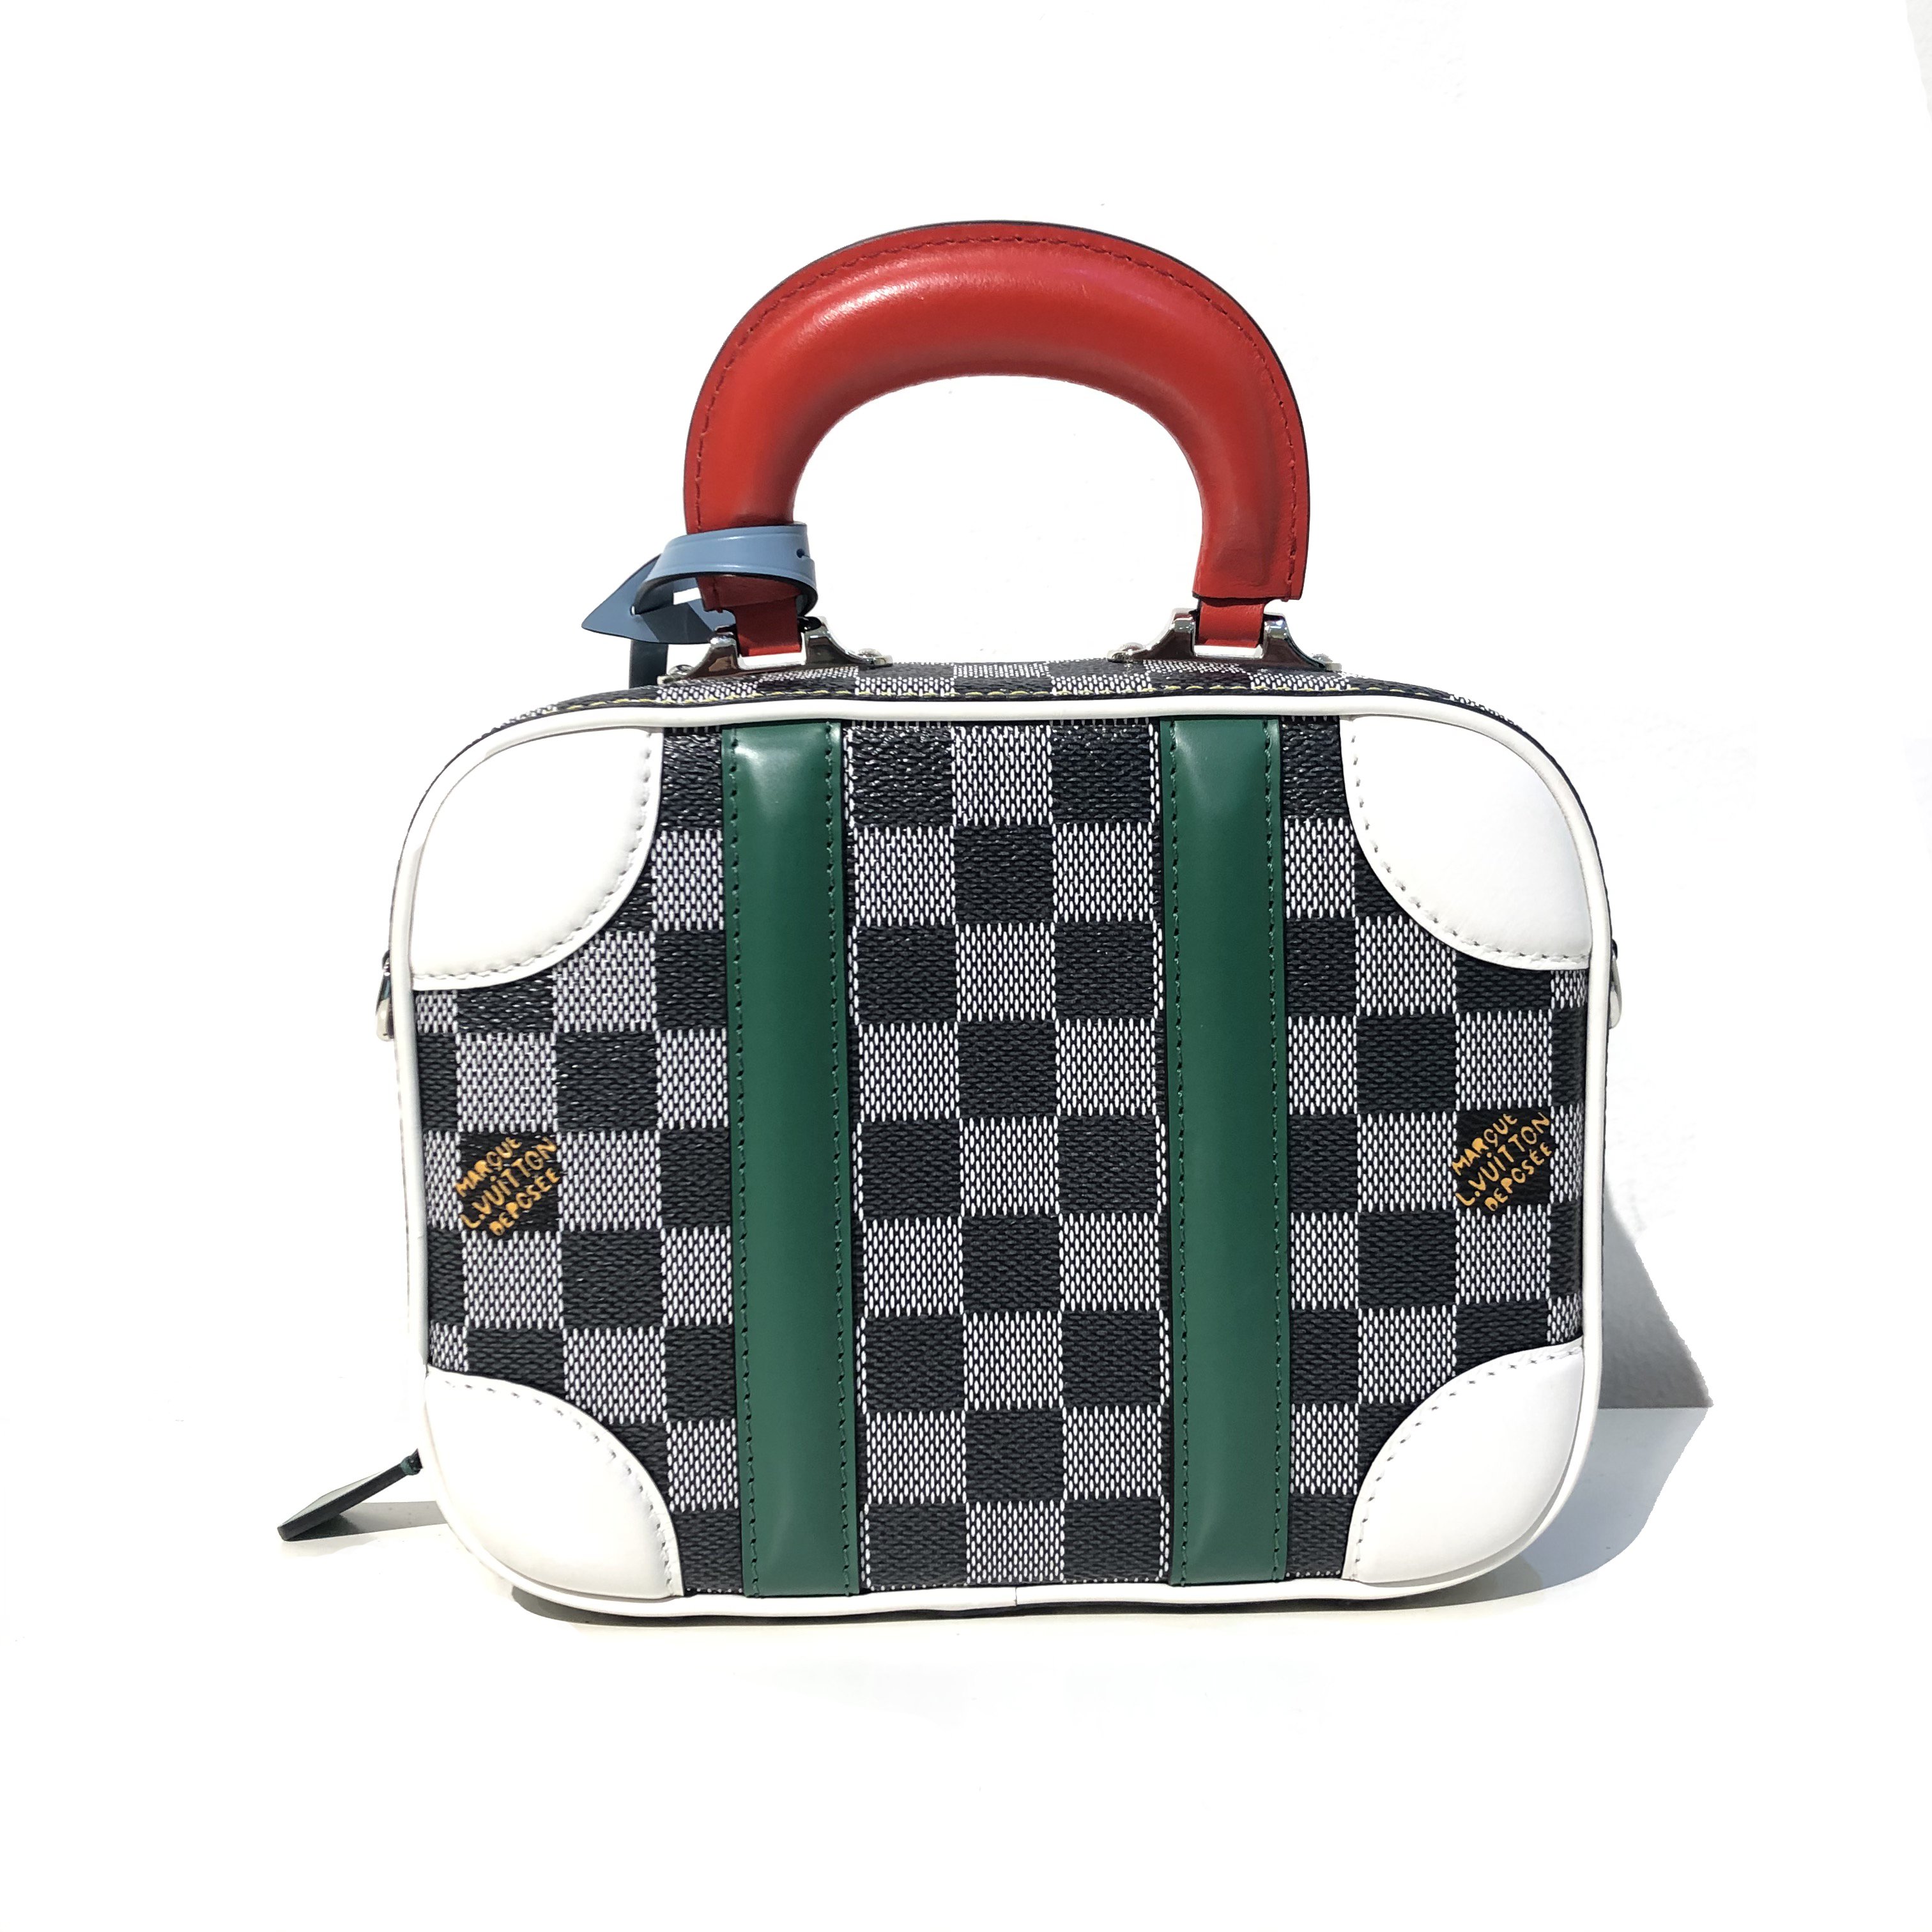 Louis Vuitton Damier Graphite Mini Luggage BB Handbag